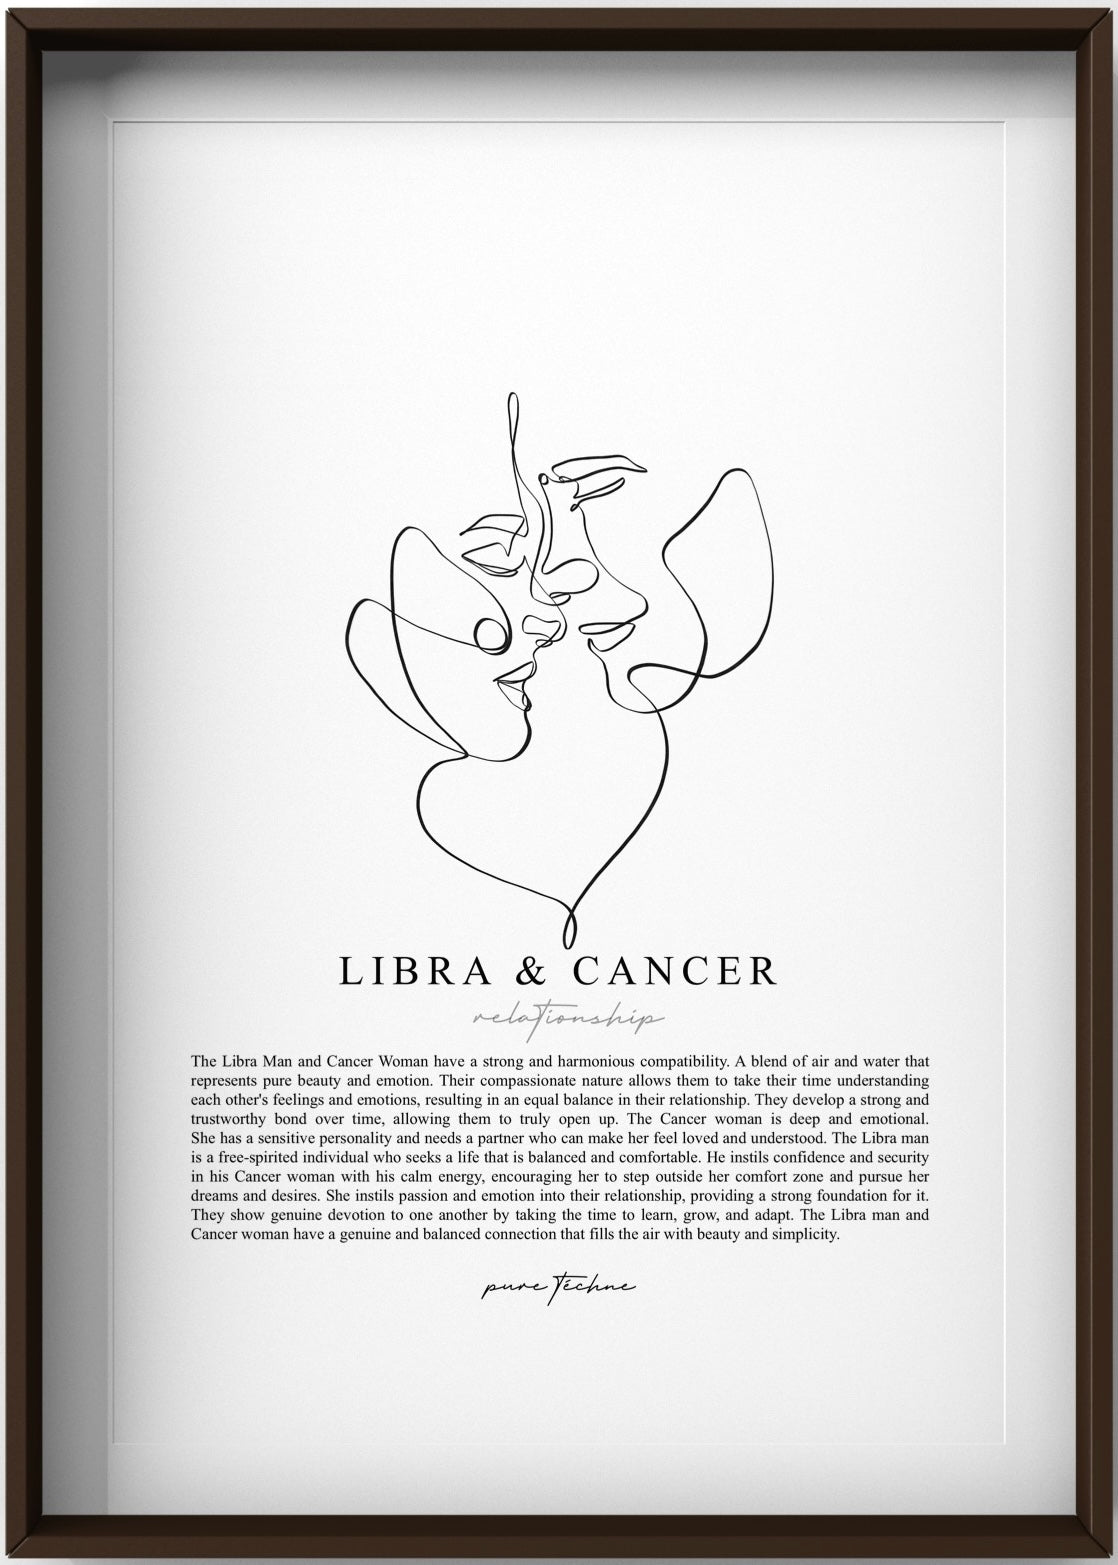 Libra Man & Cancer Woman